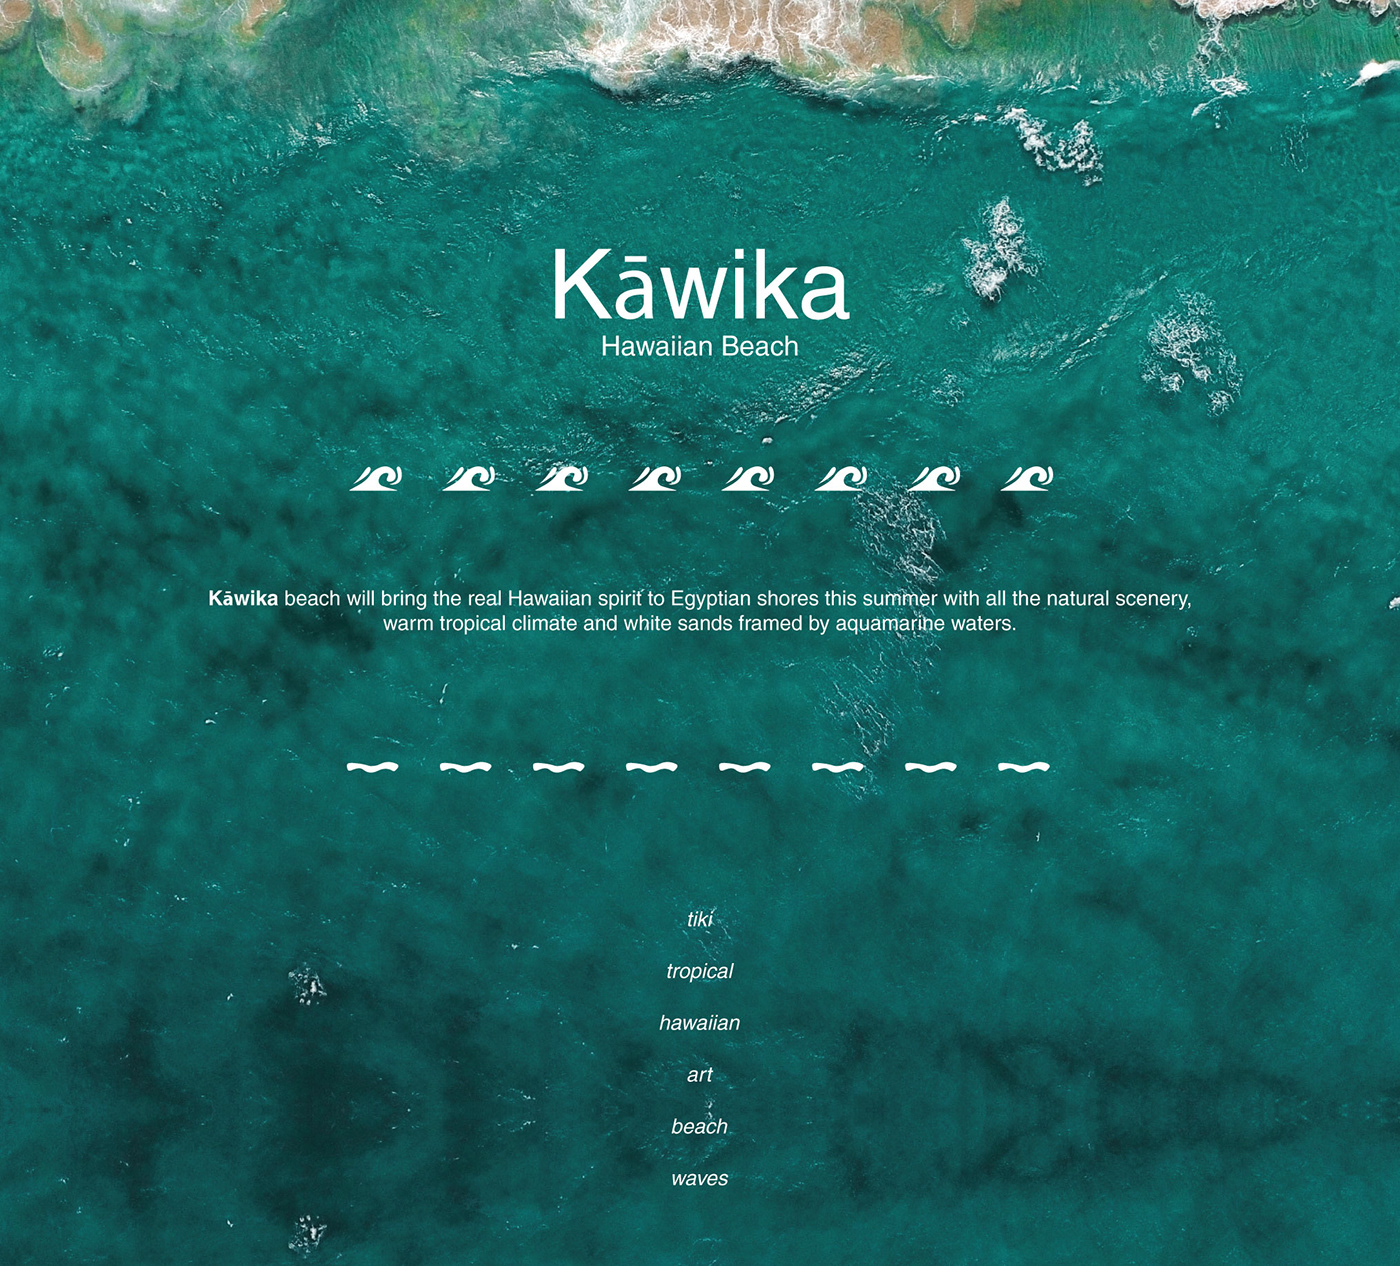 Tiki hawai hwaiian art logo beach egypt northcoast Tropical waves